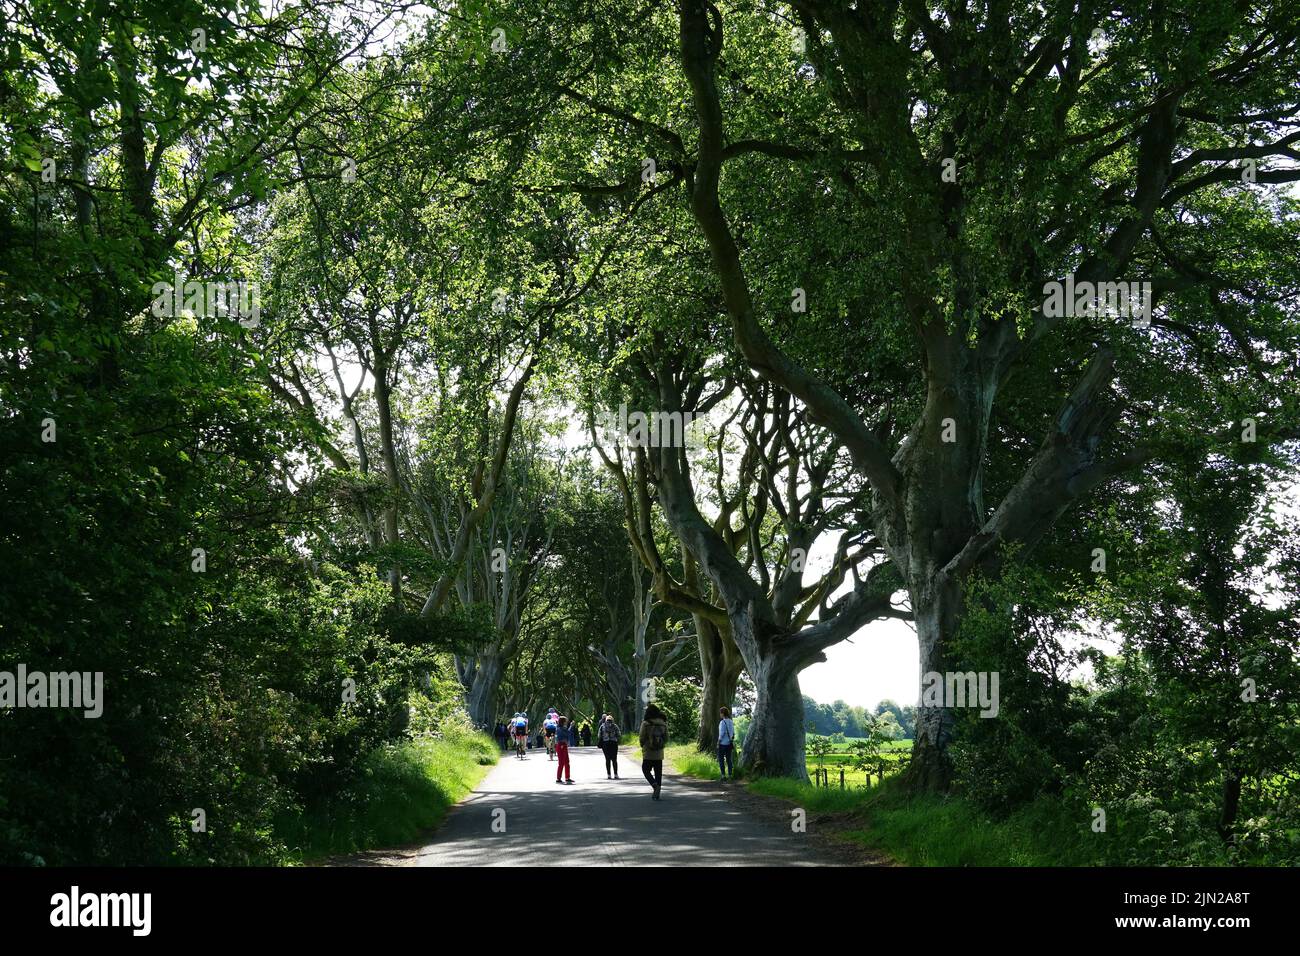 Dark Hedges, beech trees, County Antrim, Northern Ireland, Tuaisceart Éireann, United Kingdom, Europe, Game of Thrones location. Stock Photo